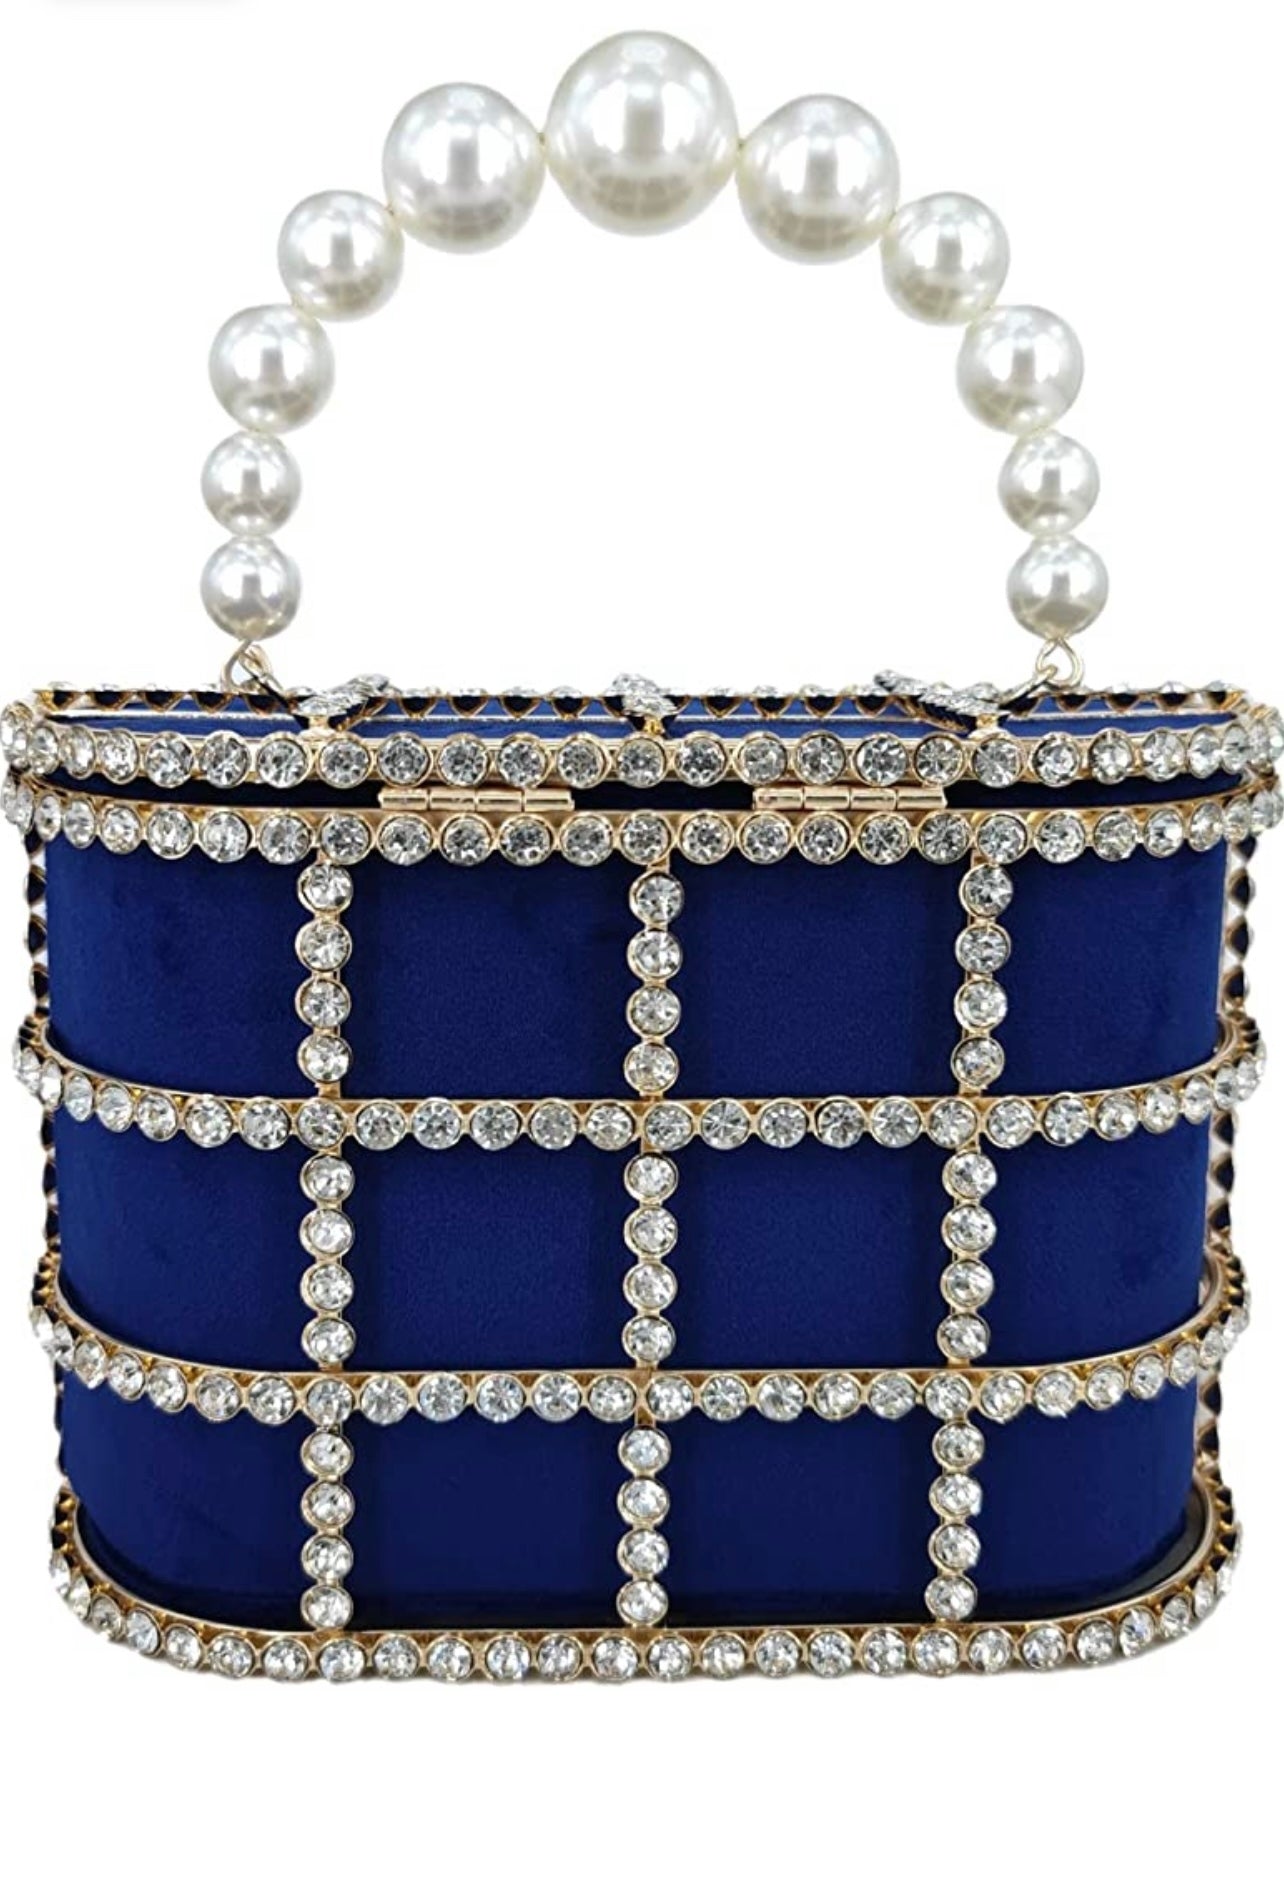 Crystal Diamond Top Handle Embellished Evening Clutch Bag - blue